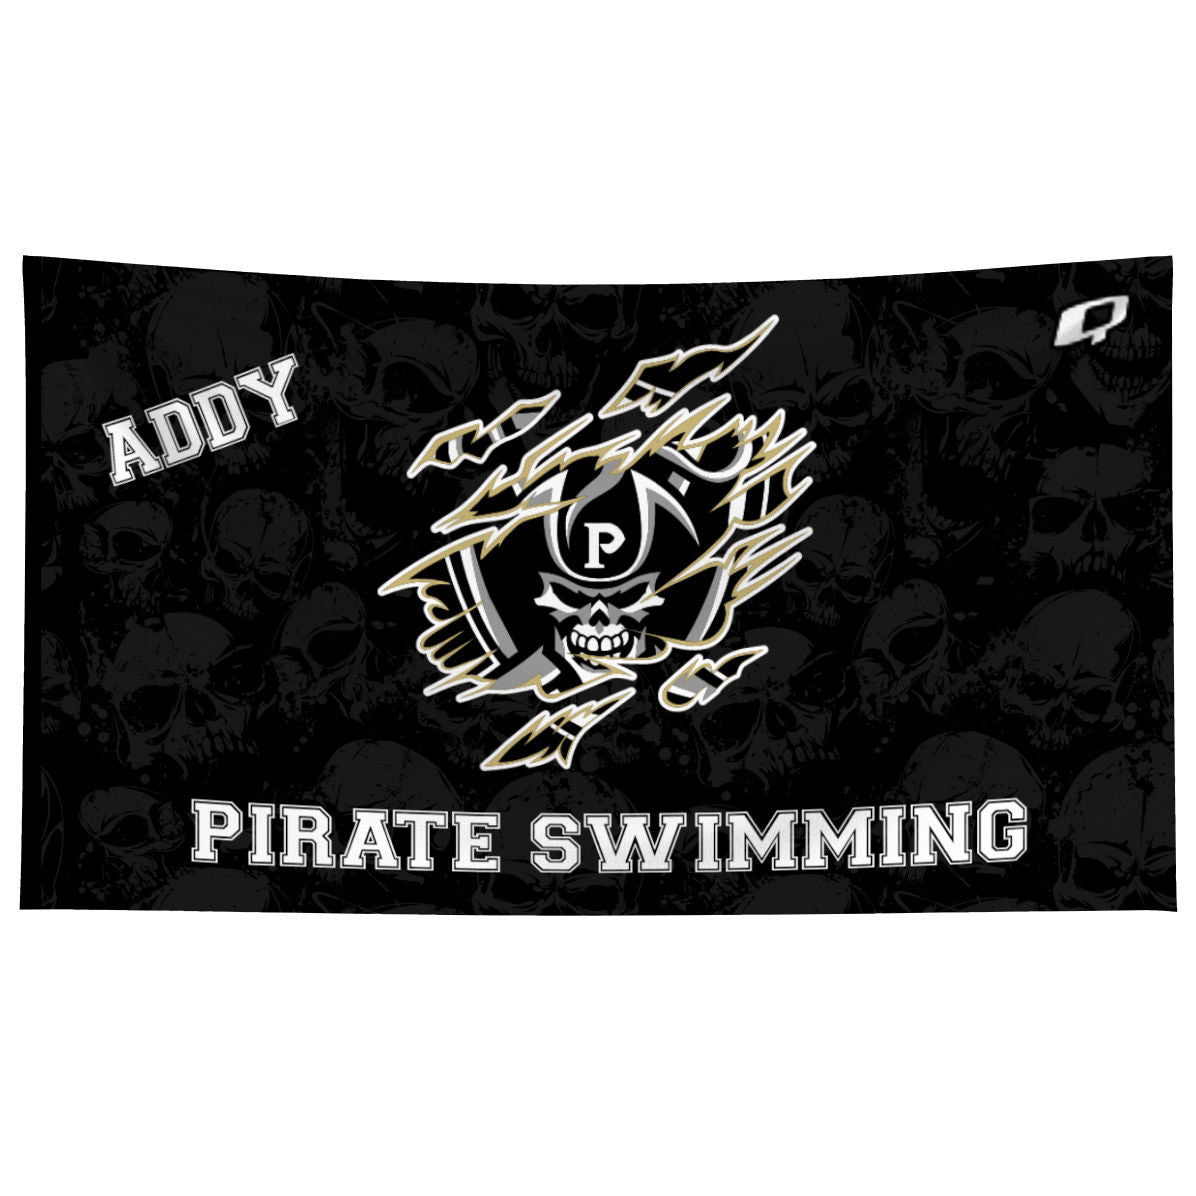 ADDY - Microfiber Swim Towel